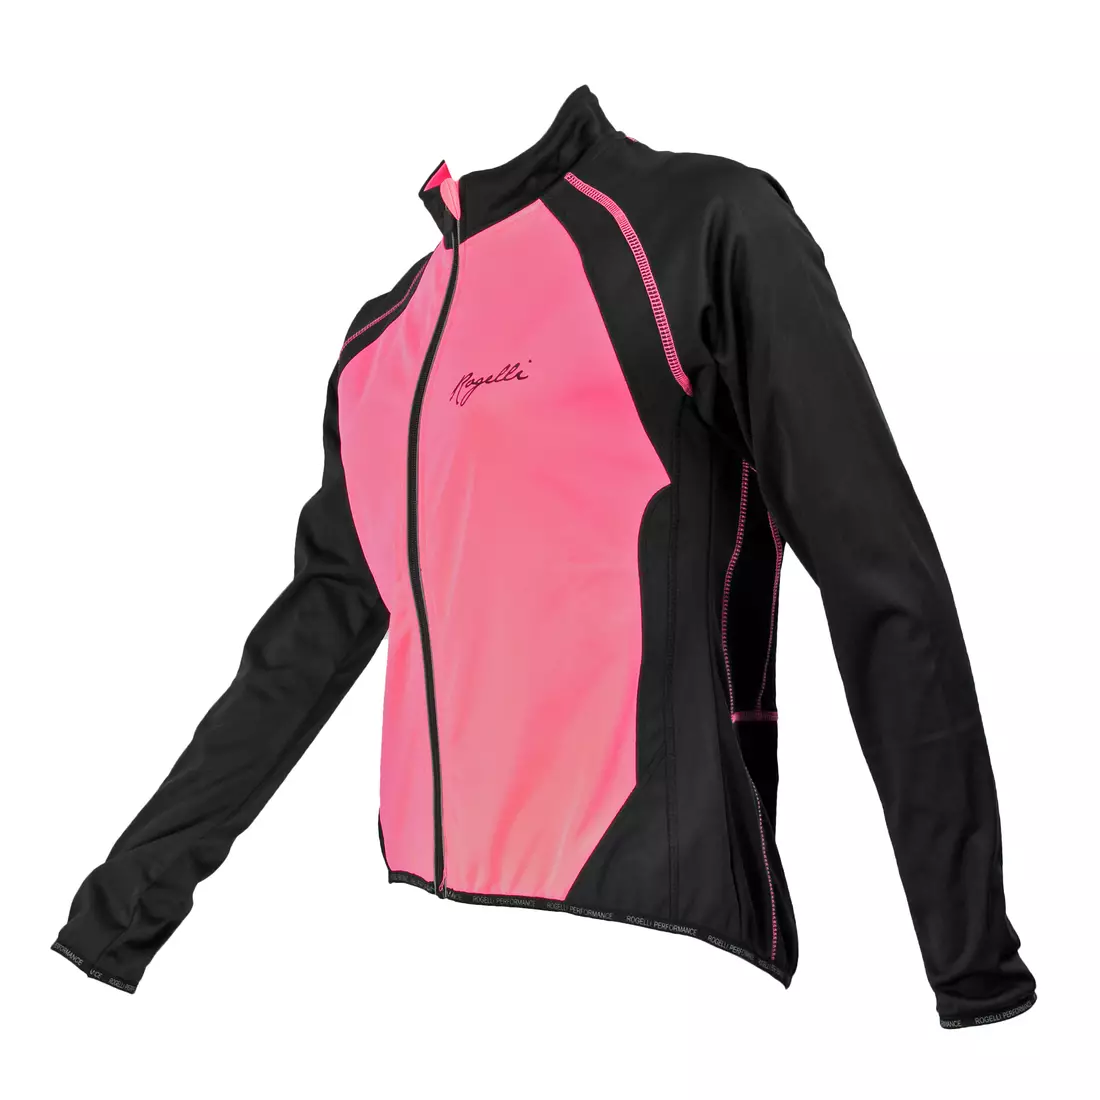 ROGELLI BICE - dámská Softshellová cyklistická bunda, barva: Růžová